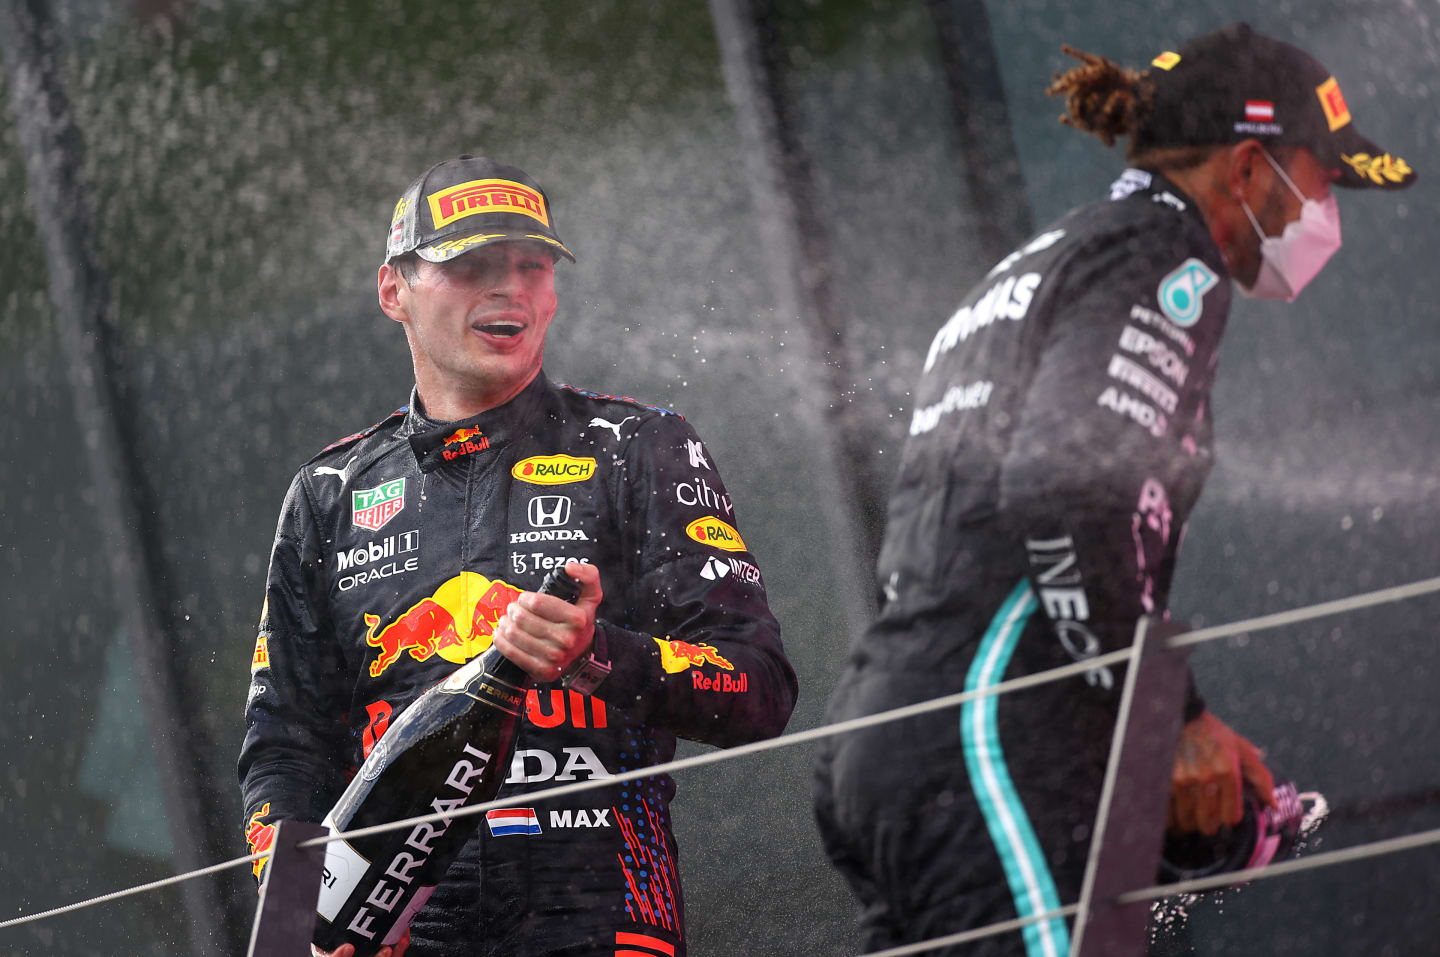 SPIELBERG, AUSTRIA - JUNE 27: Race winner Max Verstappen of Netherlands and Red Bull Racing and